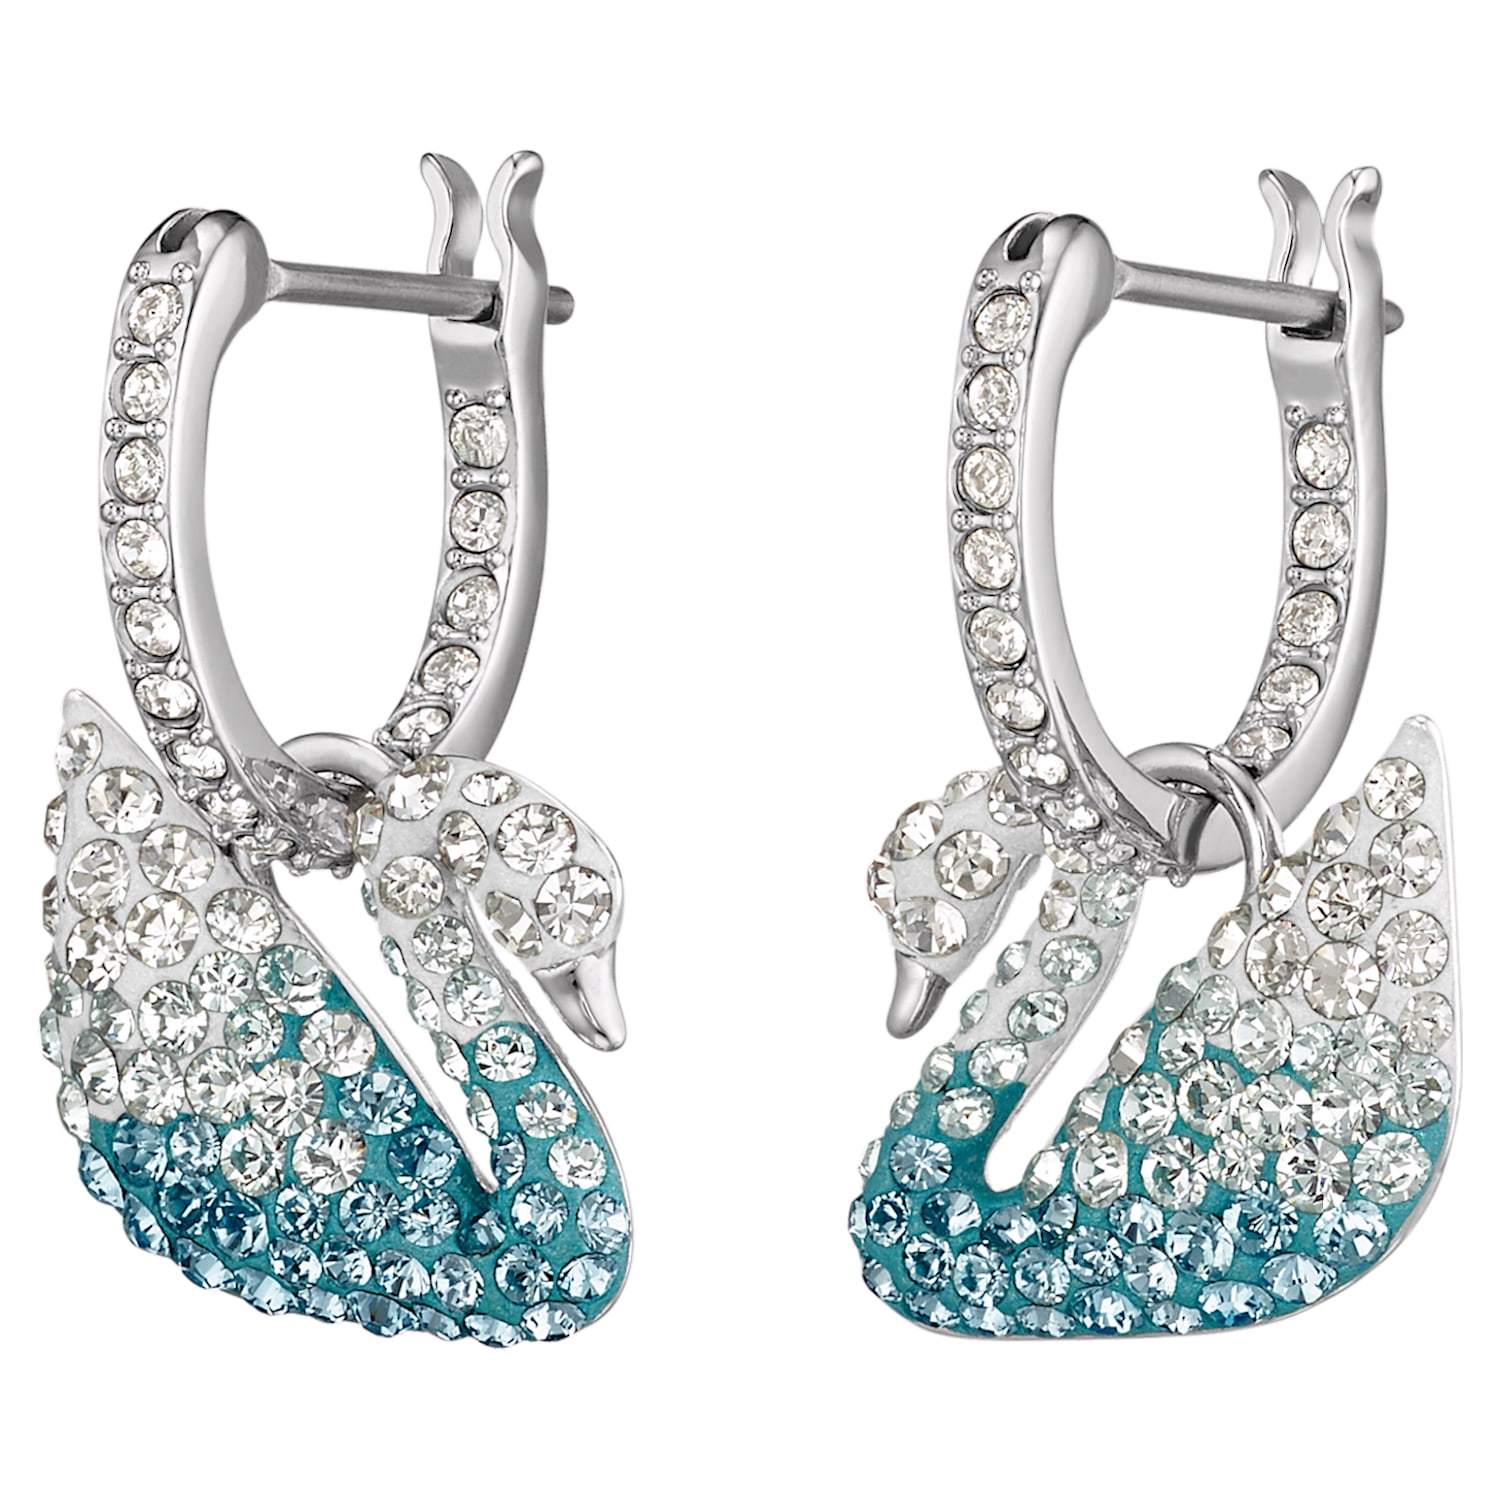 SWAROVSKI Iconic Swan Earrings - Blue #5512577